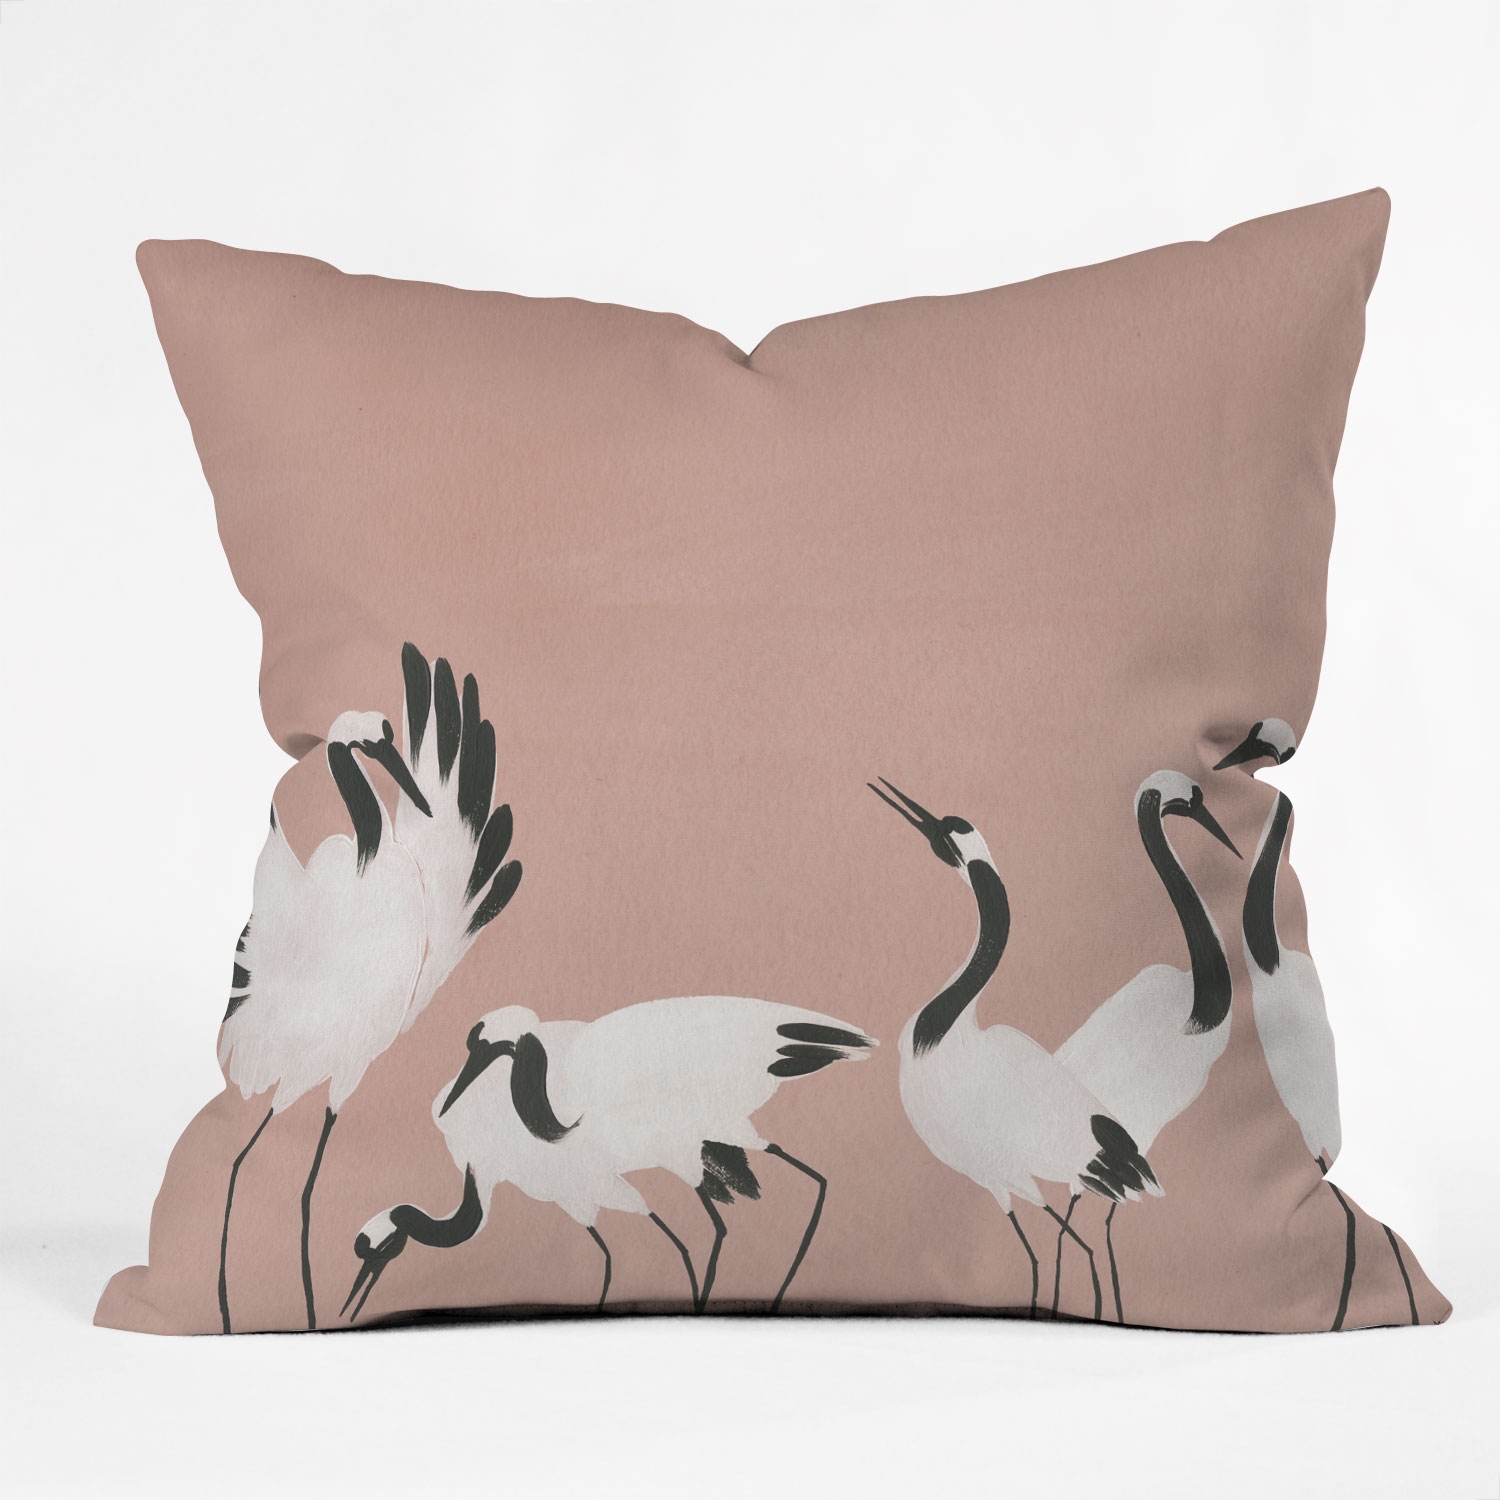 Crane Dance Mauve Pink by Megan Galante - Outdoor Throw Pillow 16" x 16" - Image 1